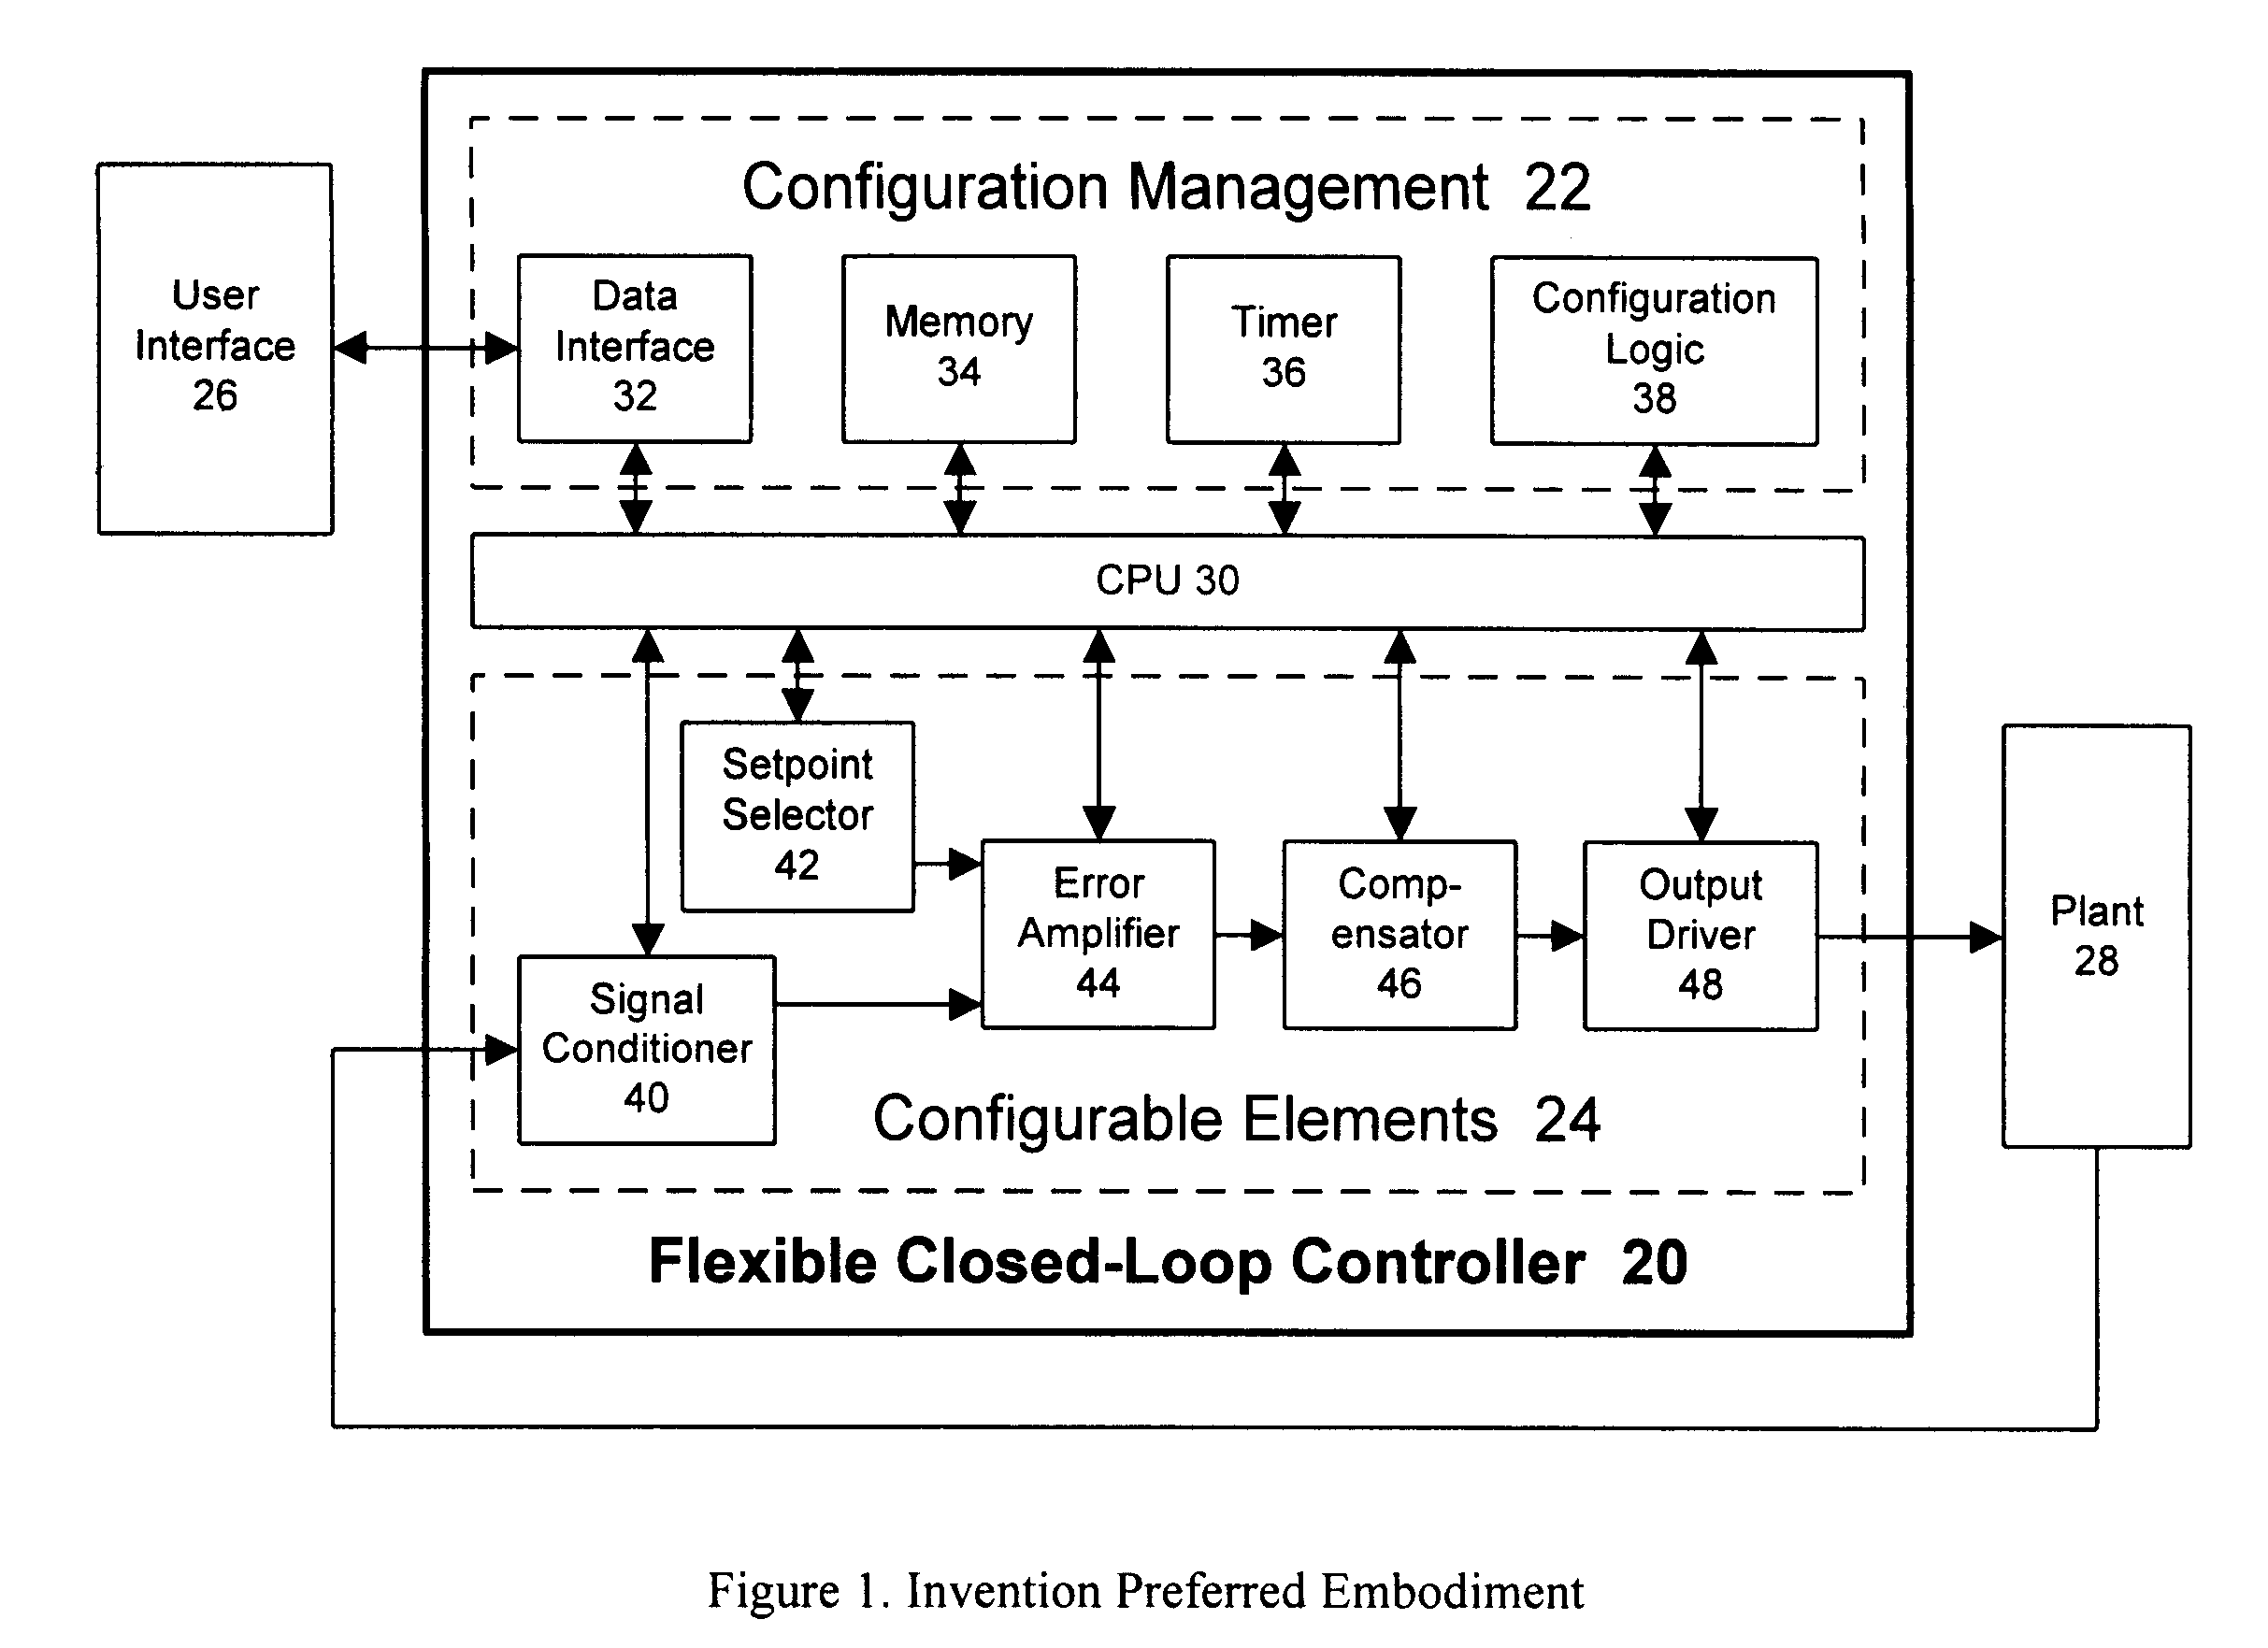 Flexible closed-loop controller